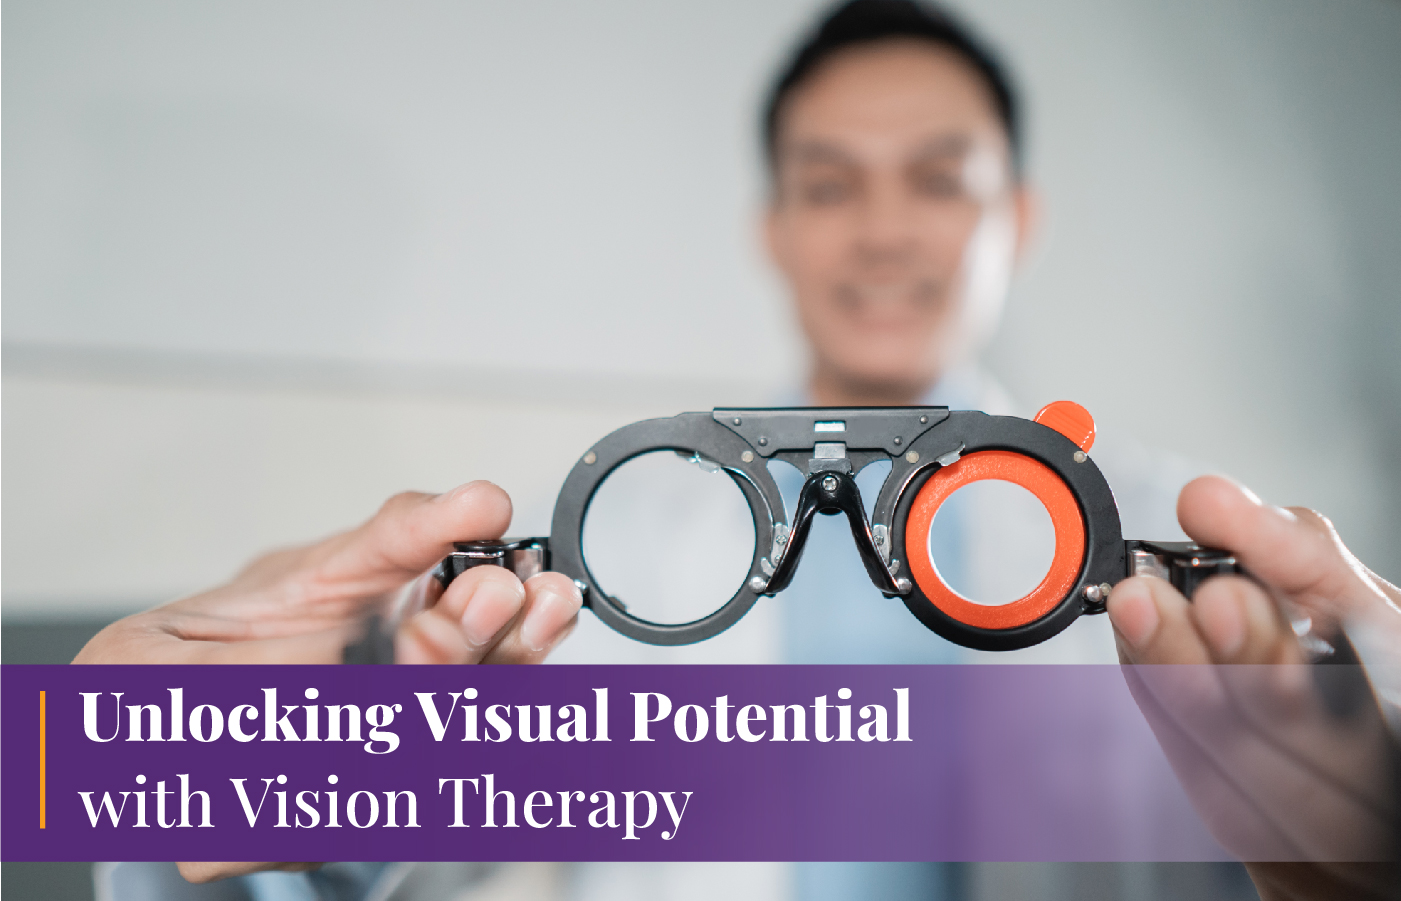 Vision-Therapy-unlocking-visual-potential